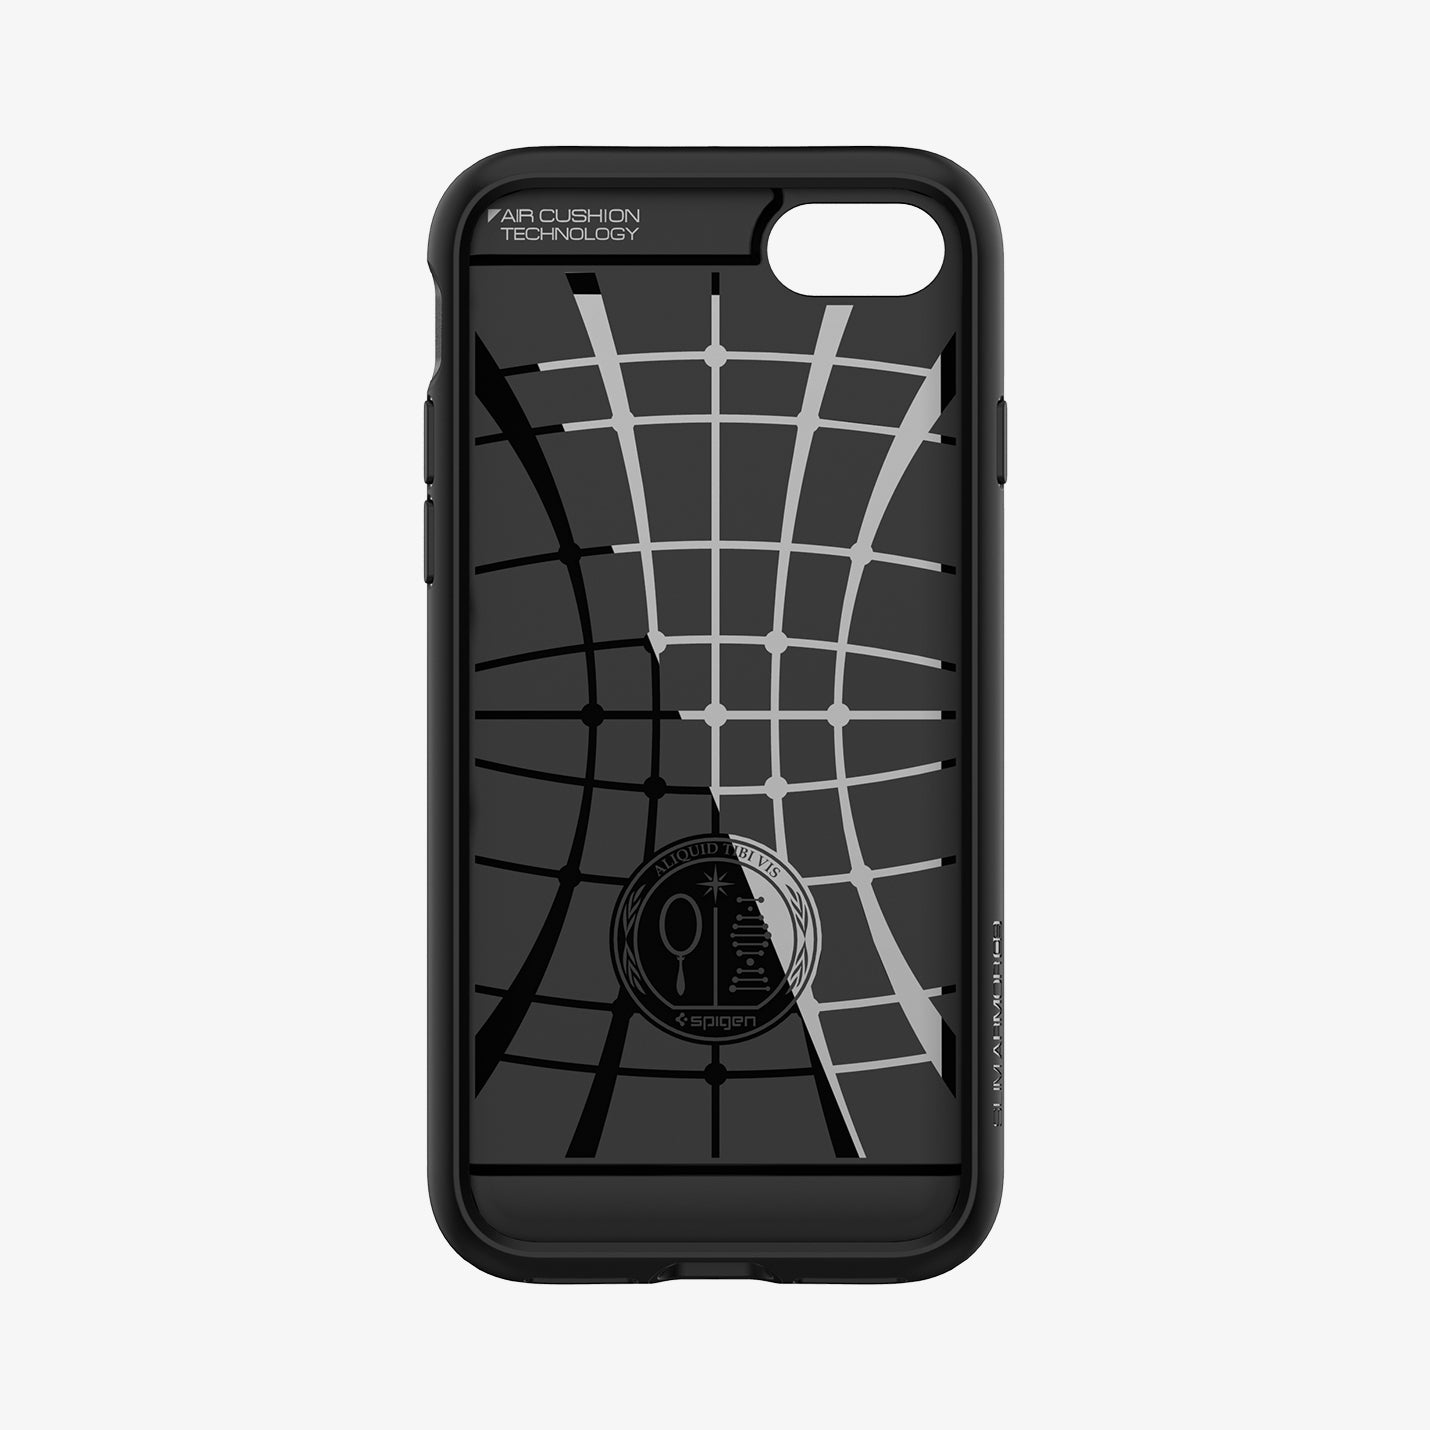 042CS20455 - iPhone SE Slim Armor CS case in black showing the inside